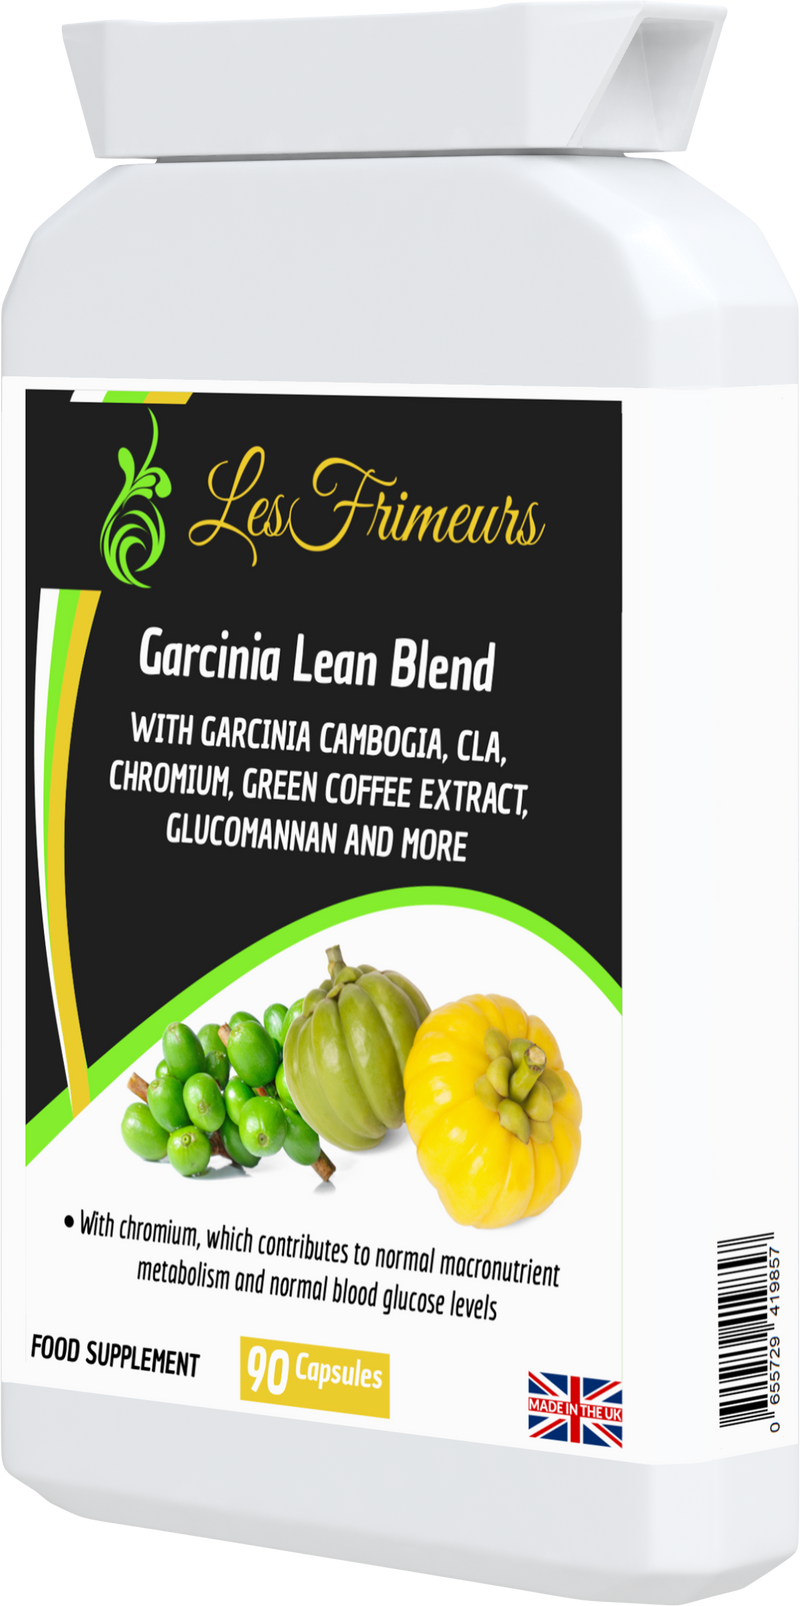 Garcinia Lean Blend